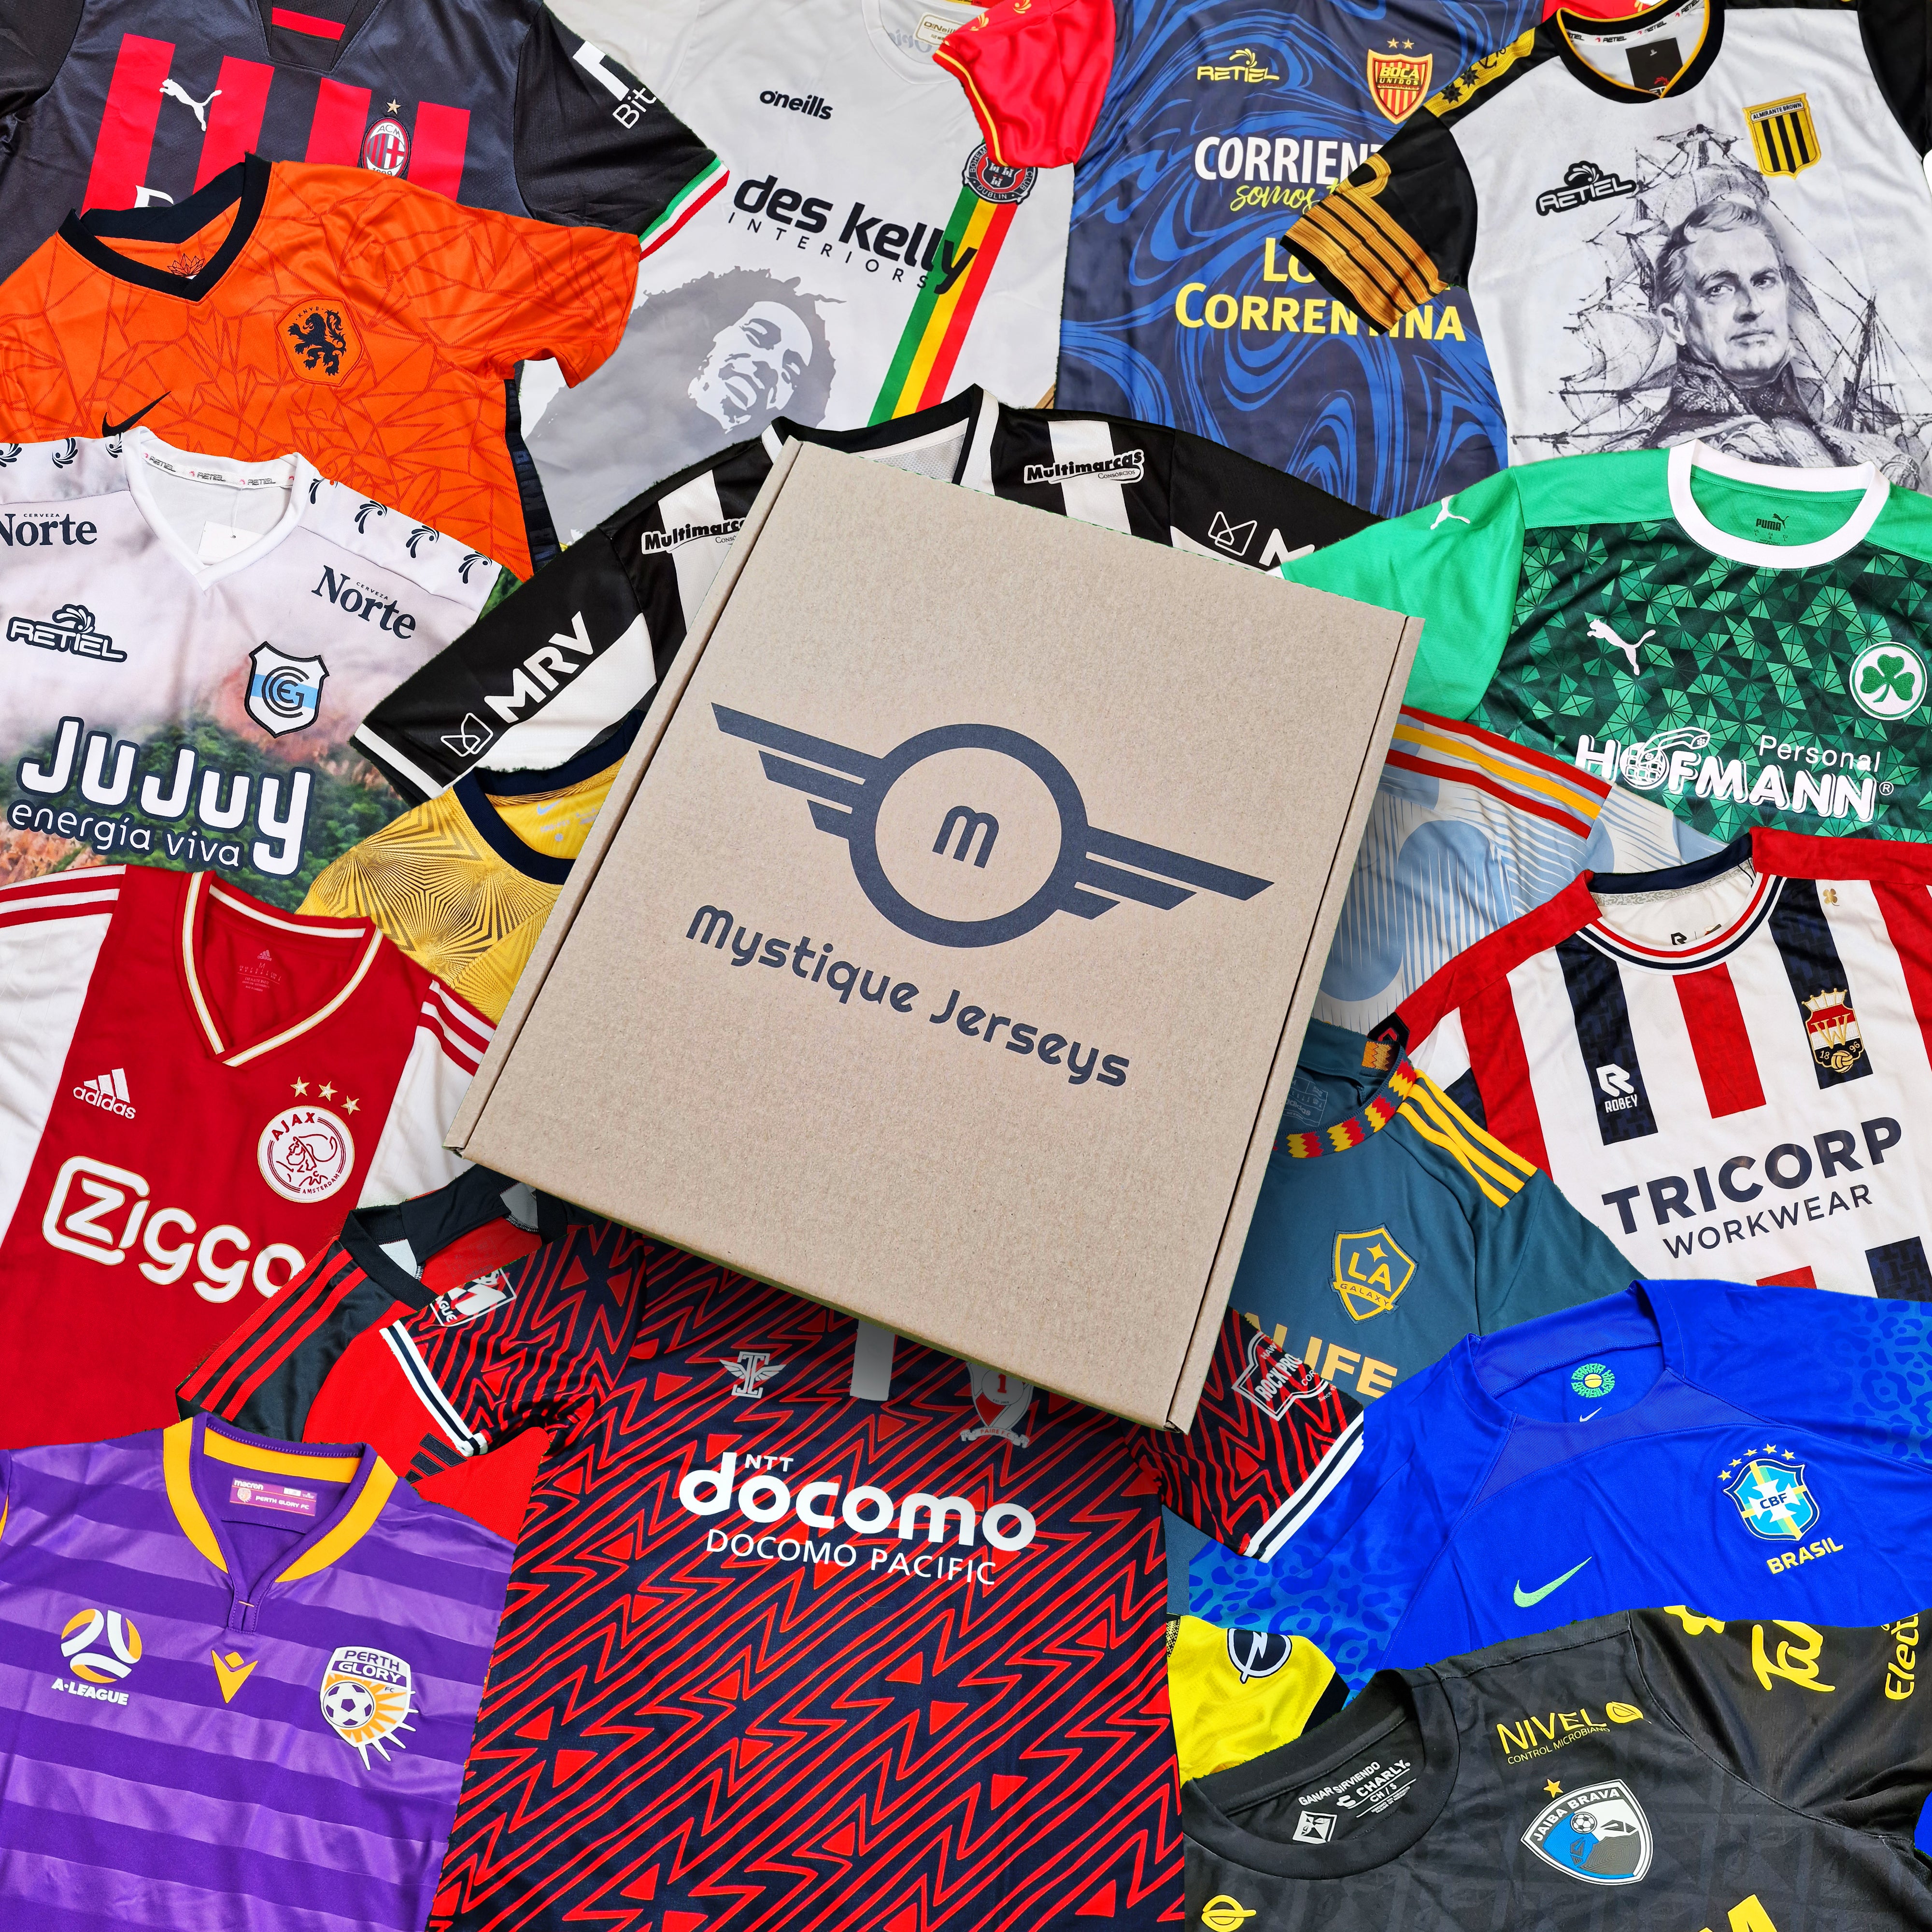 Shop Authentic Soccer Jerseys at Mystique Jerseys - Buy Now